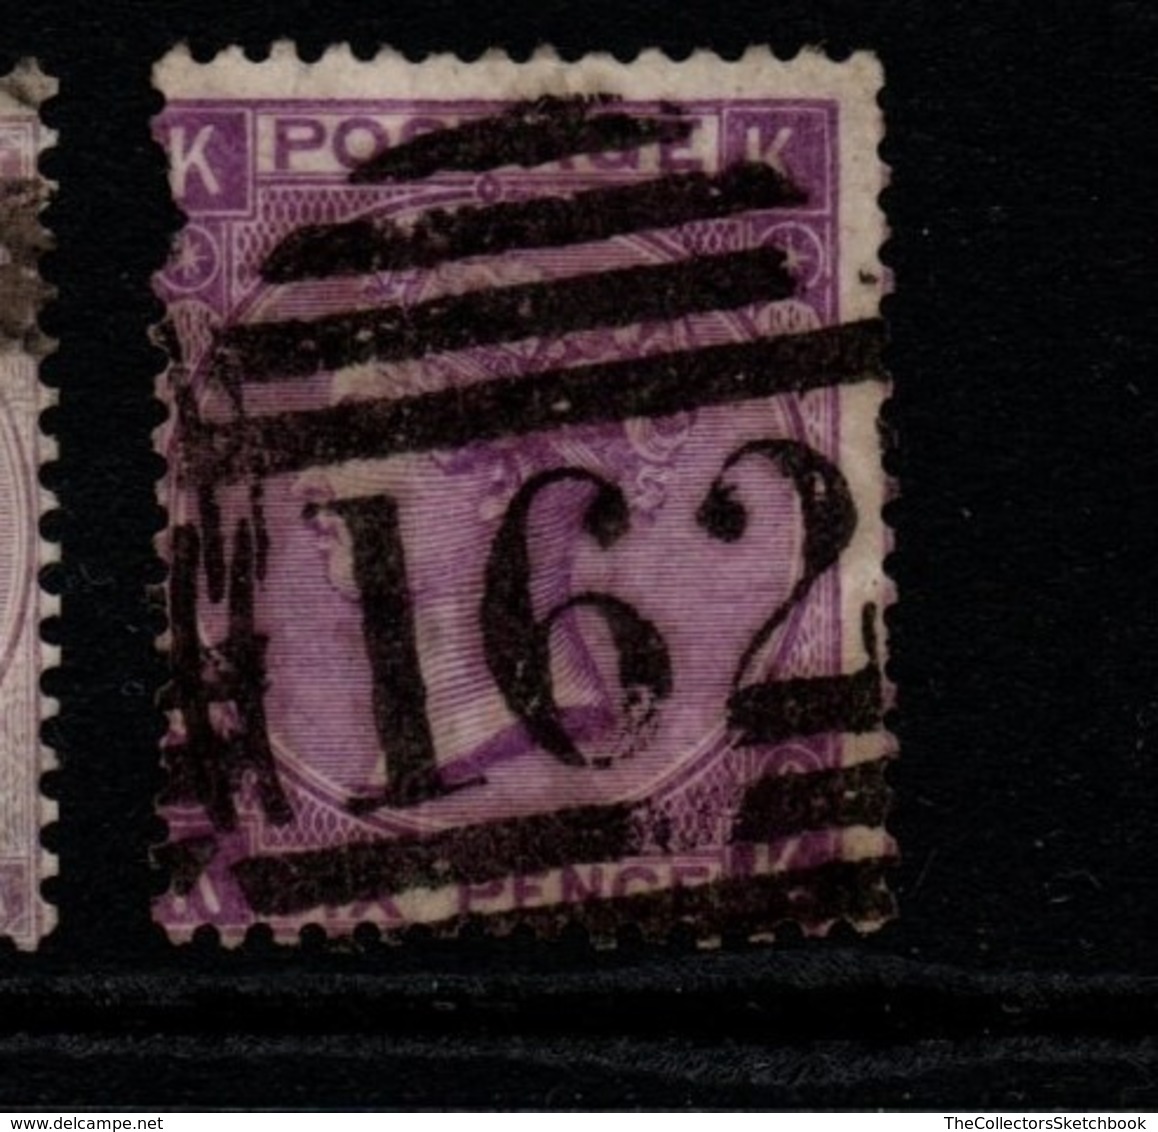 GB Victoria Surface Printed 6d  Spacefiller - Unused Stamps